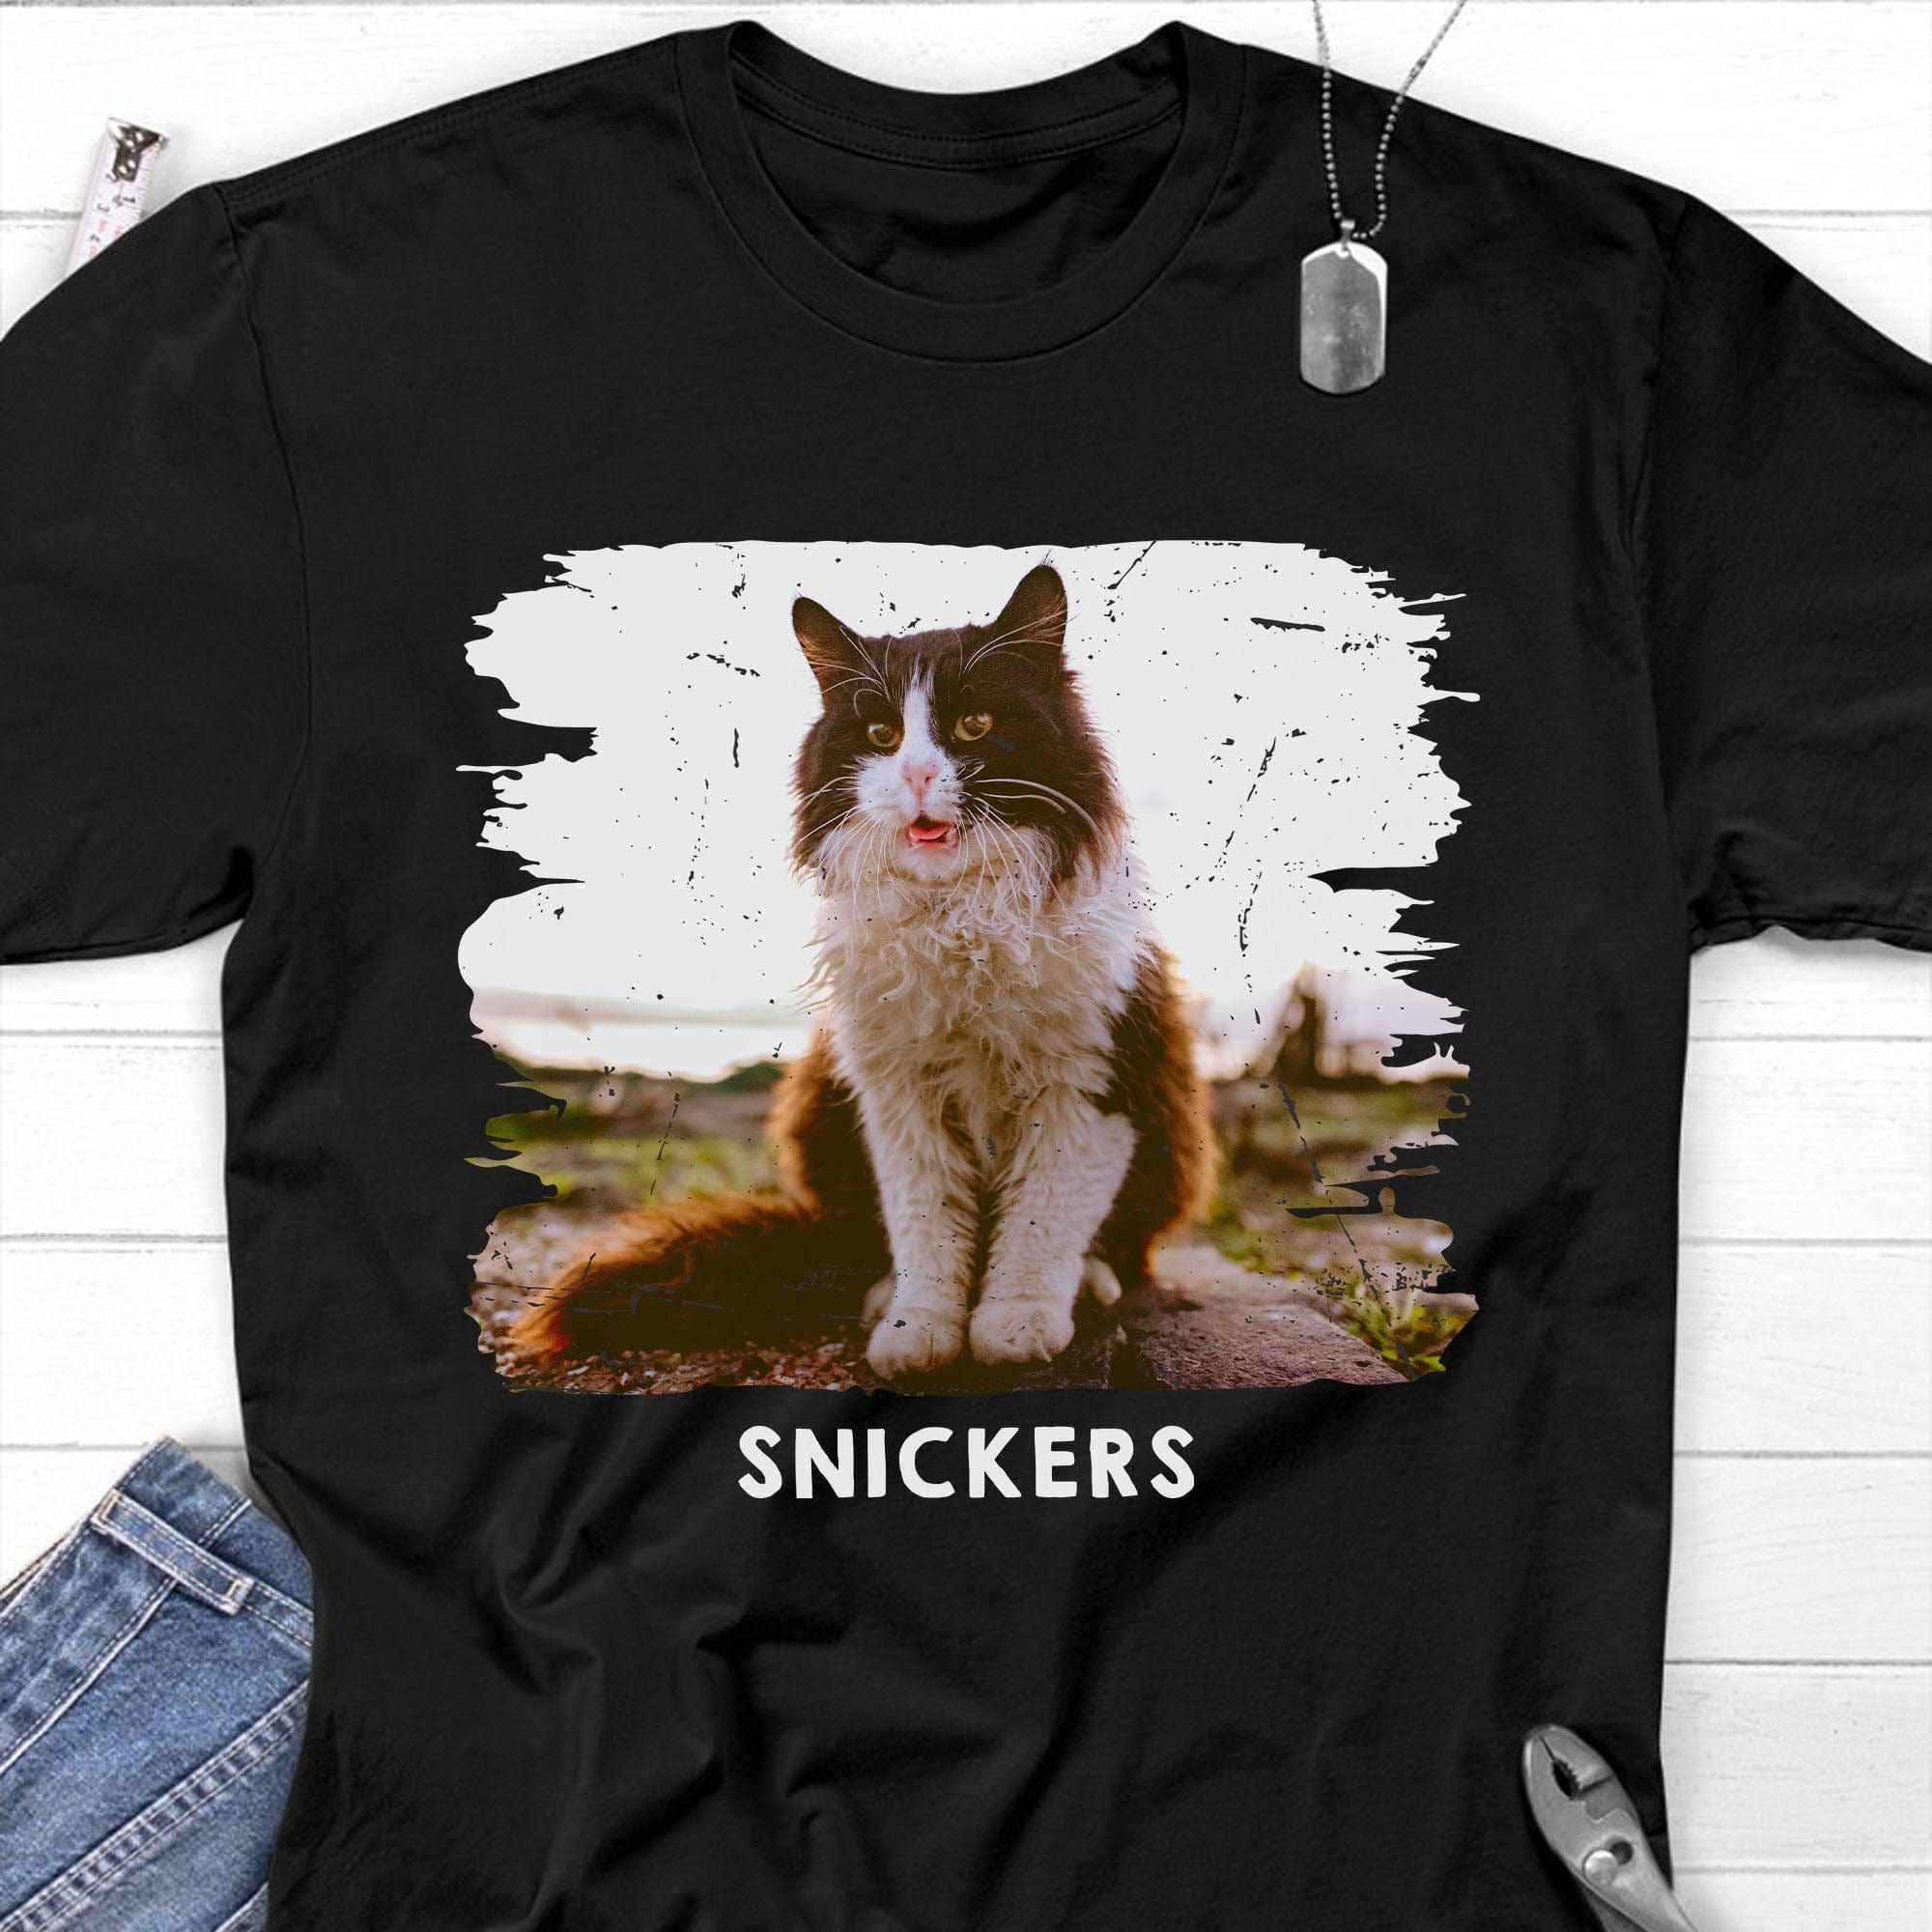 GeckoCustom Personalized Custom Photo Dog Cat Pet Shirt C606 Basic Tee / Black / S